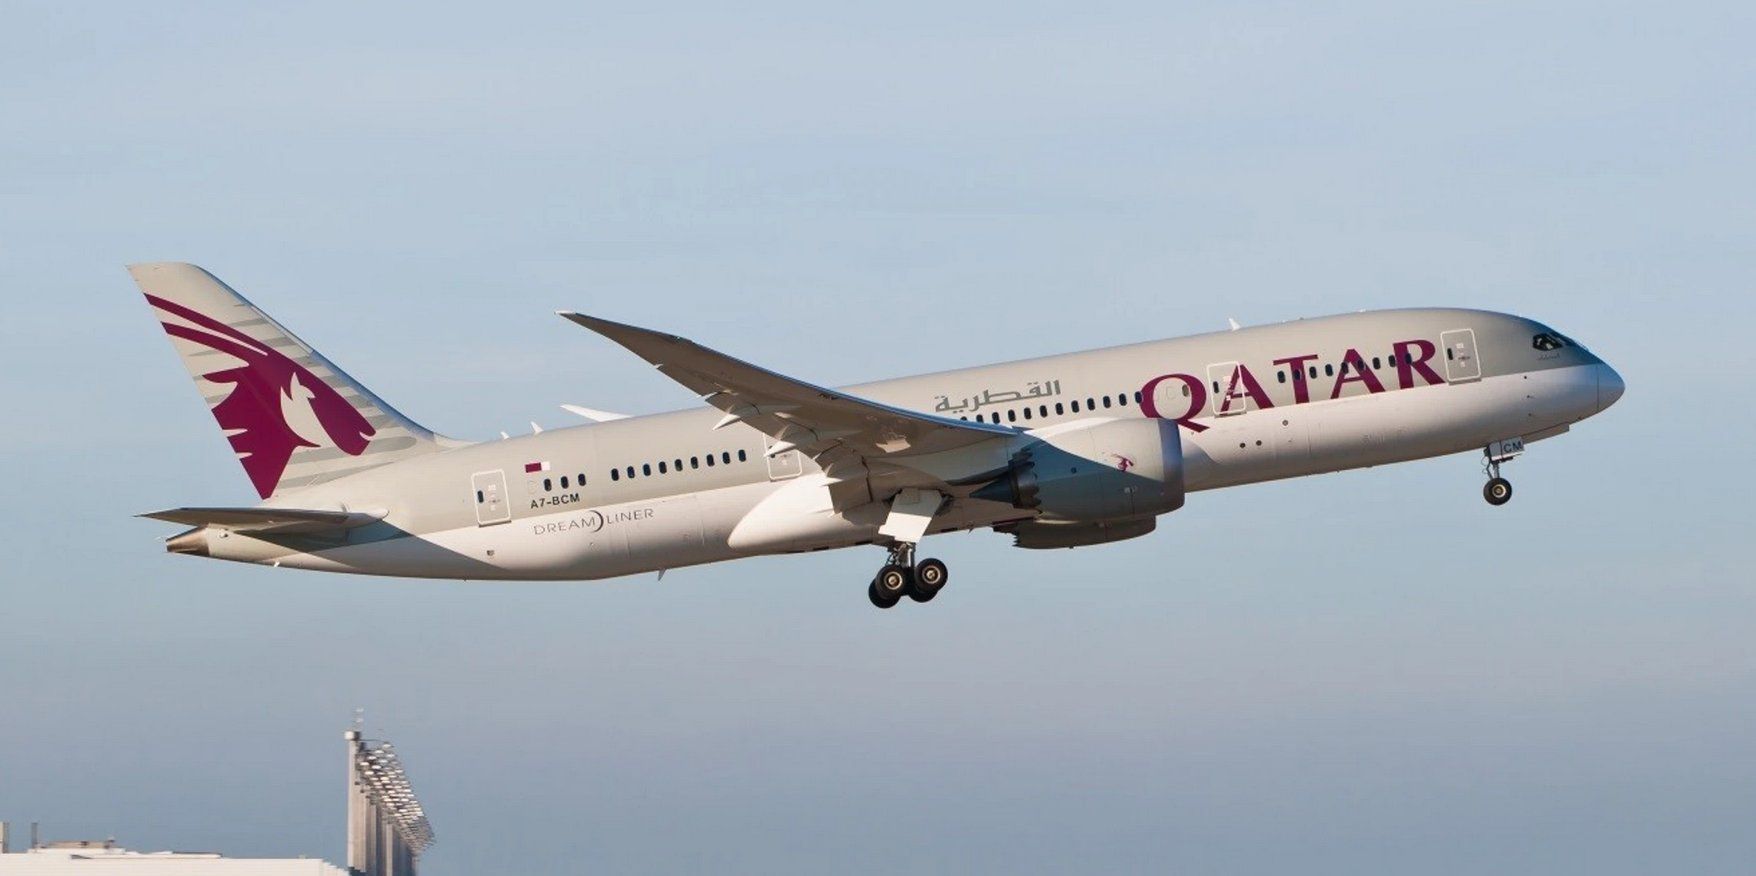 Qatar Airways Delhi-Doha flight diverted to Karachi, passengers clueless: Report